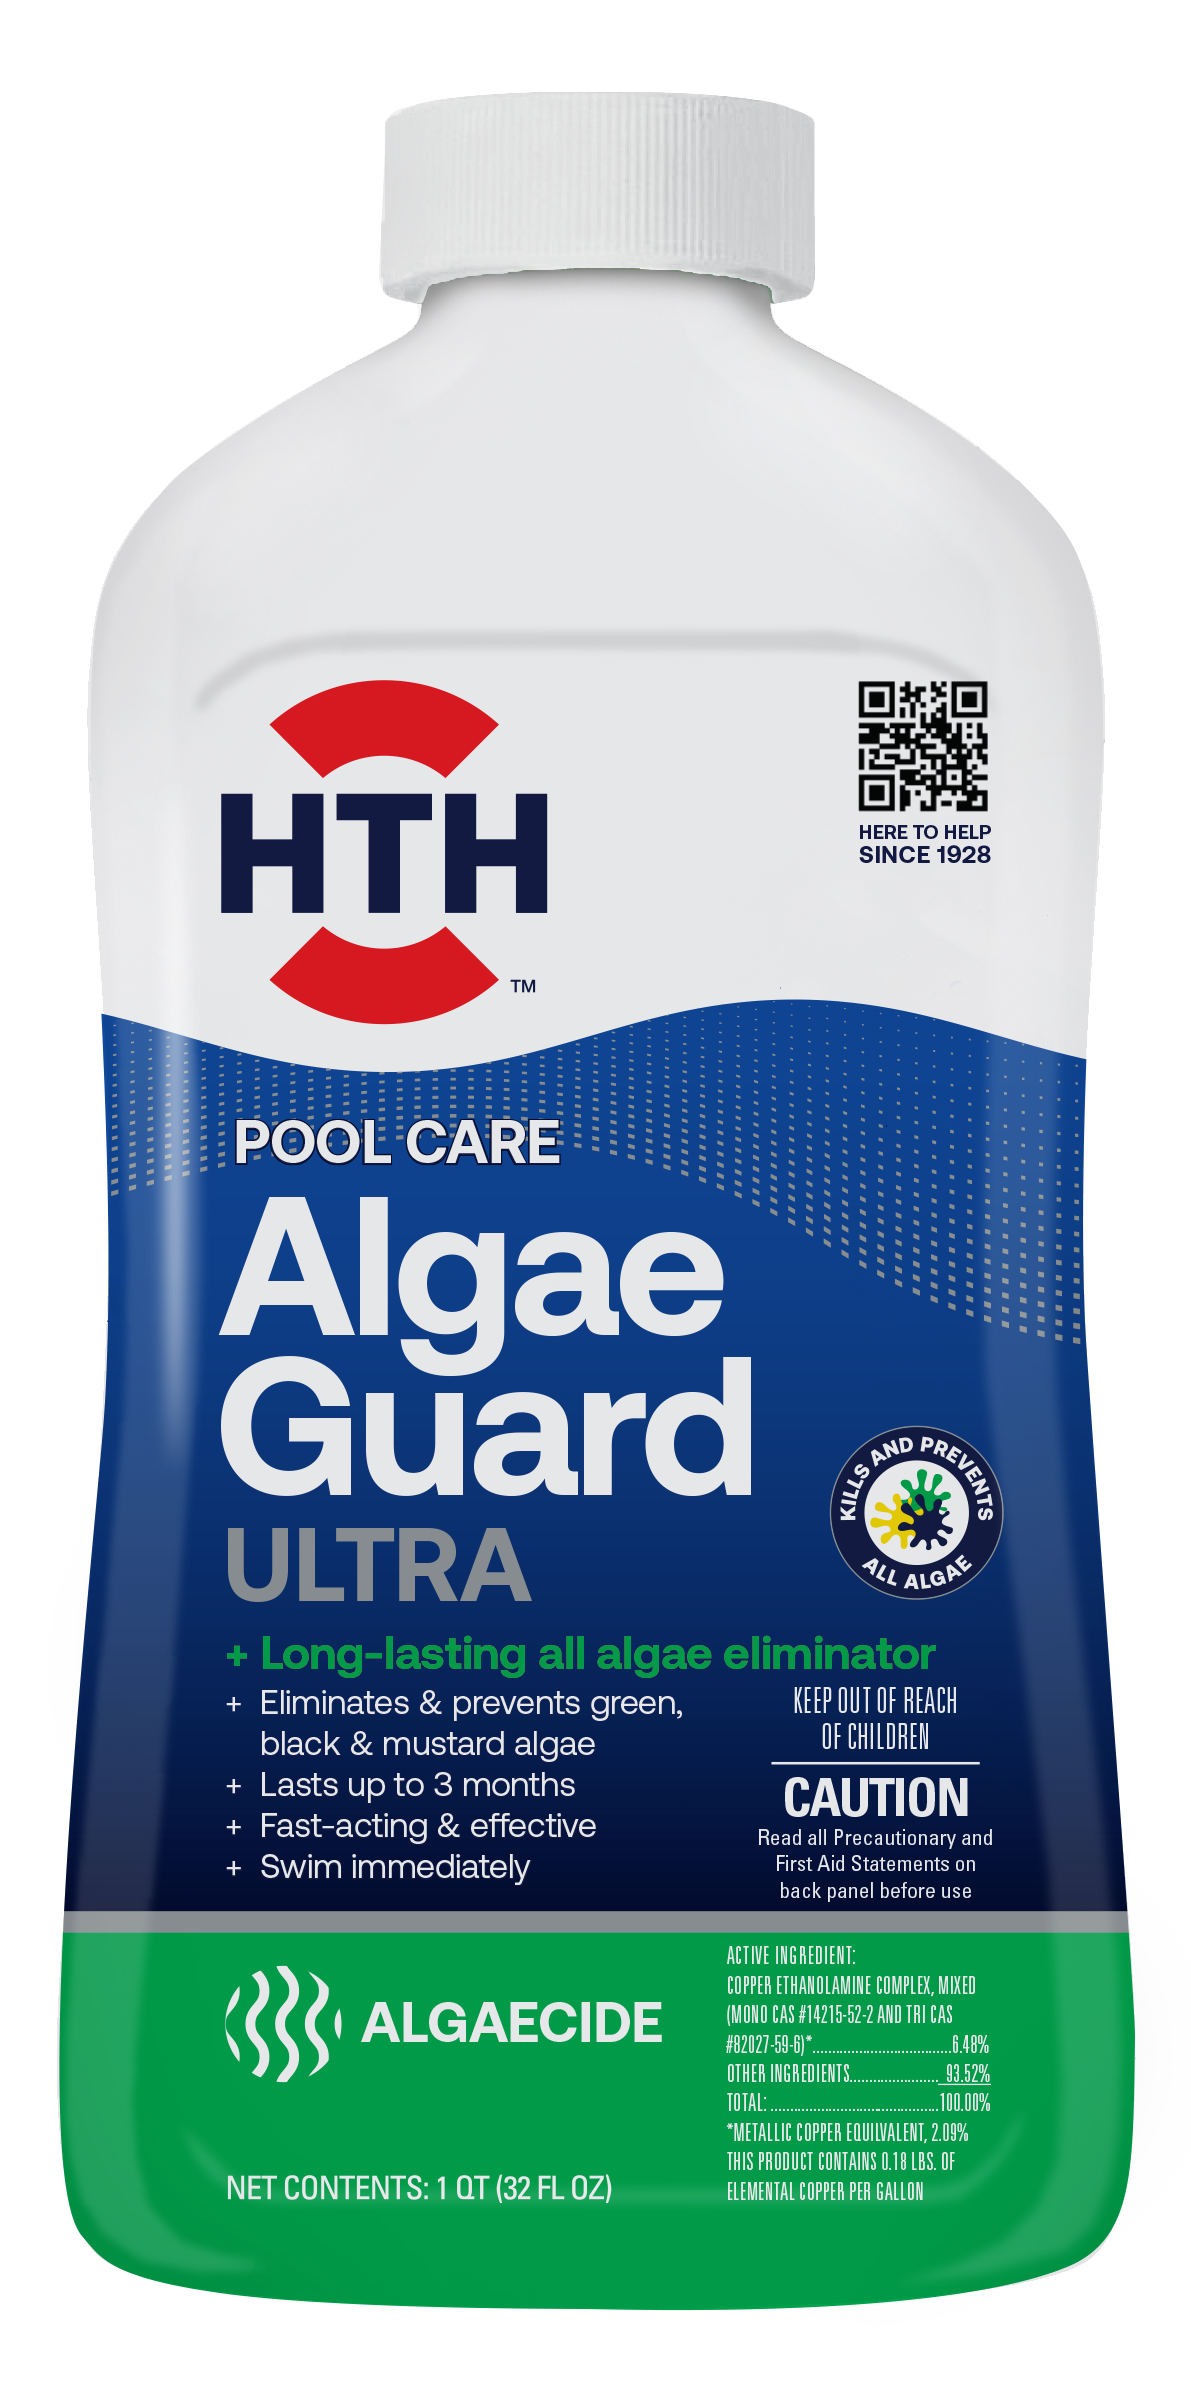 HTH™ Pool Care Algae Guard Advanced: All In One Algaecide